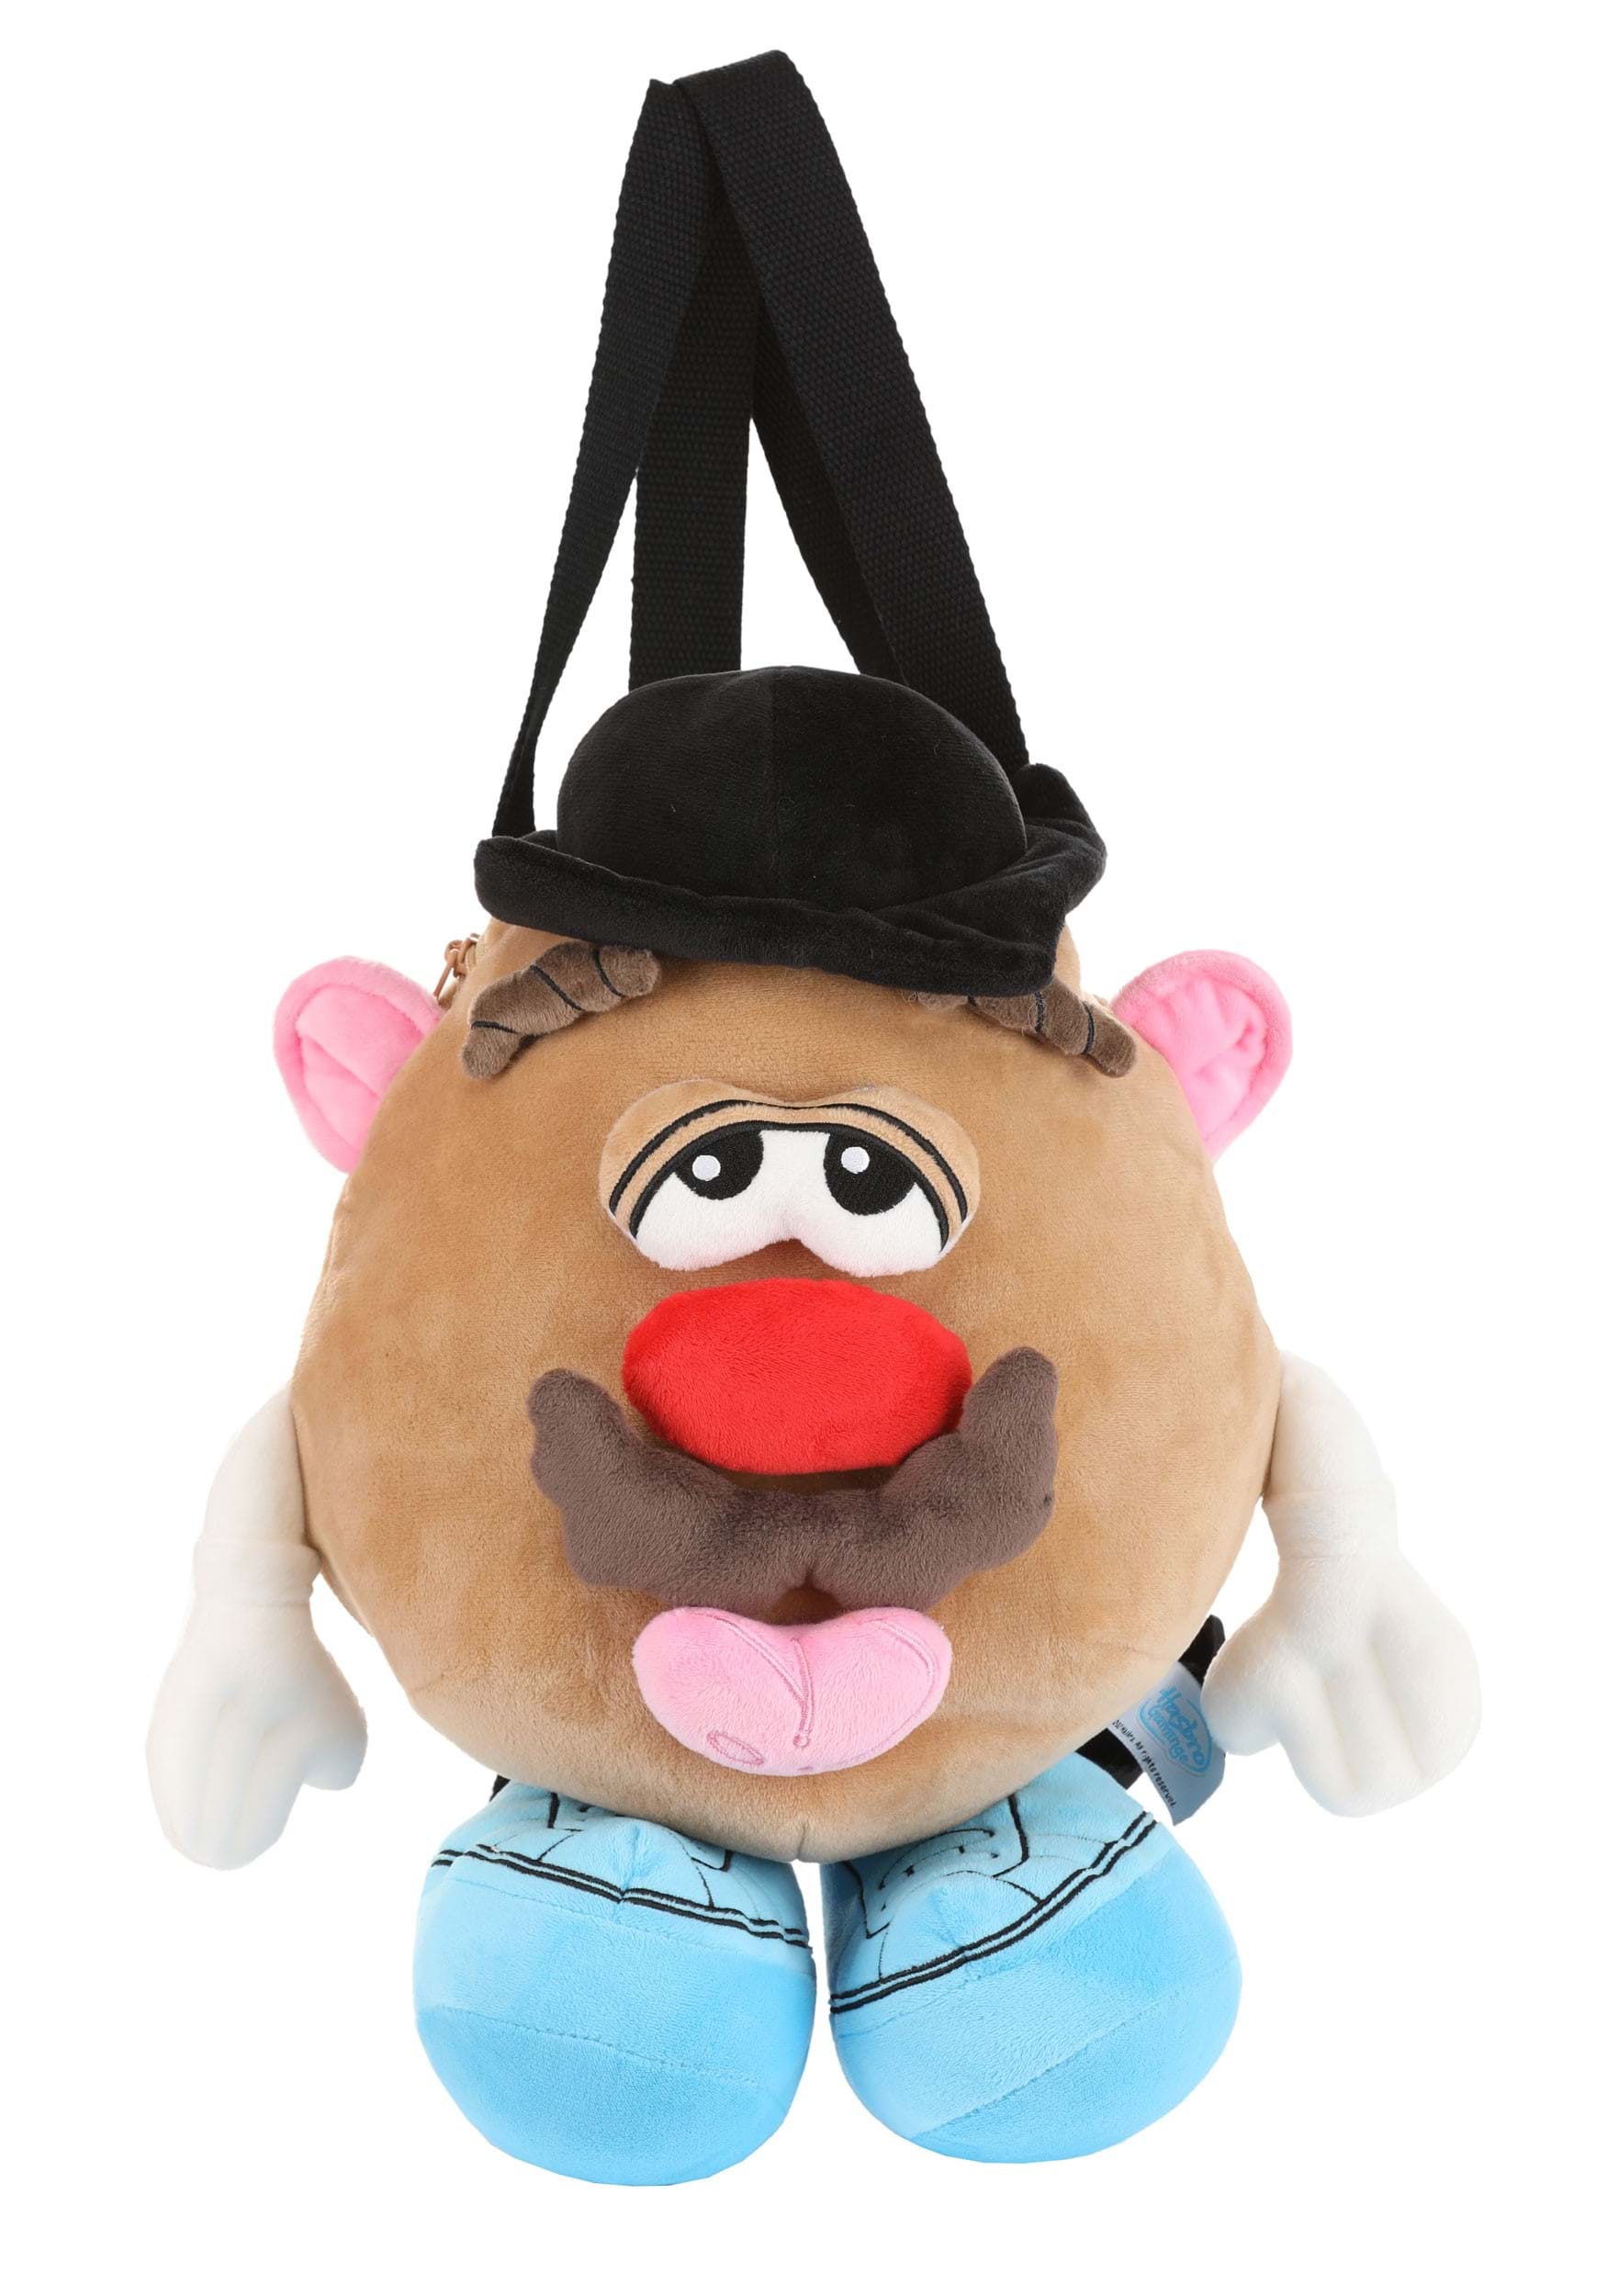 Mr. Potato Head Toys for sale in Little Rock, Arkansas